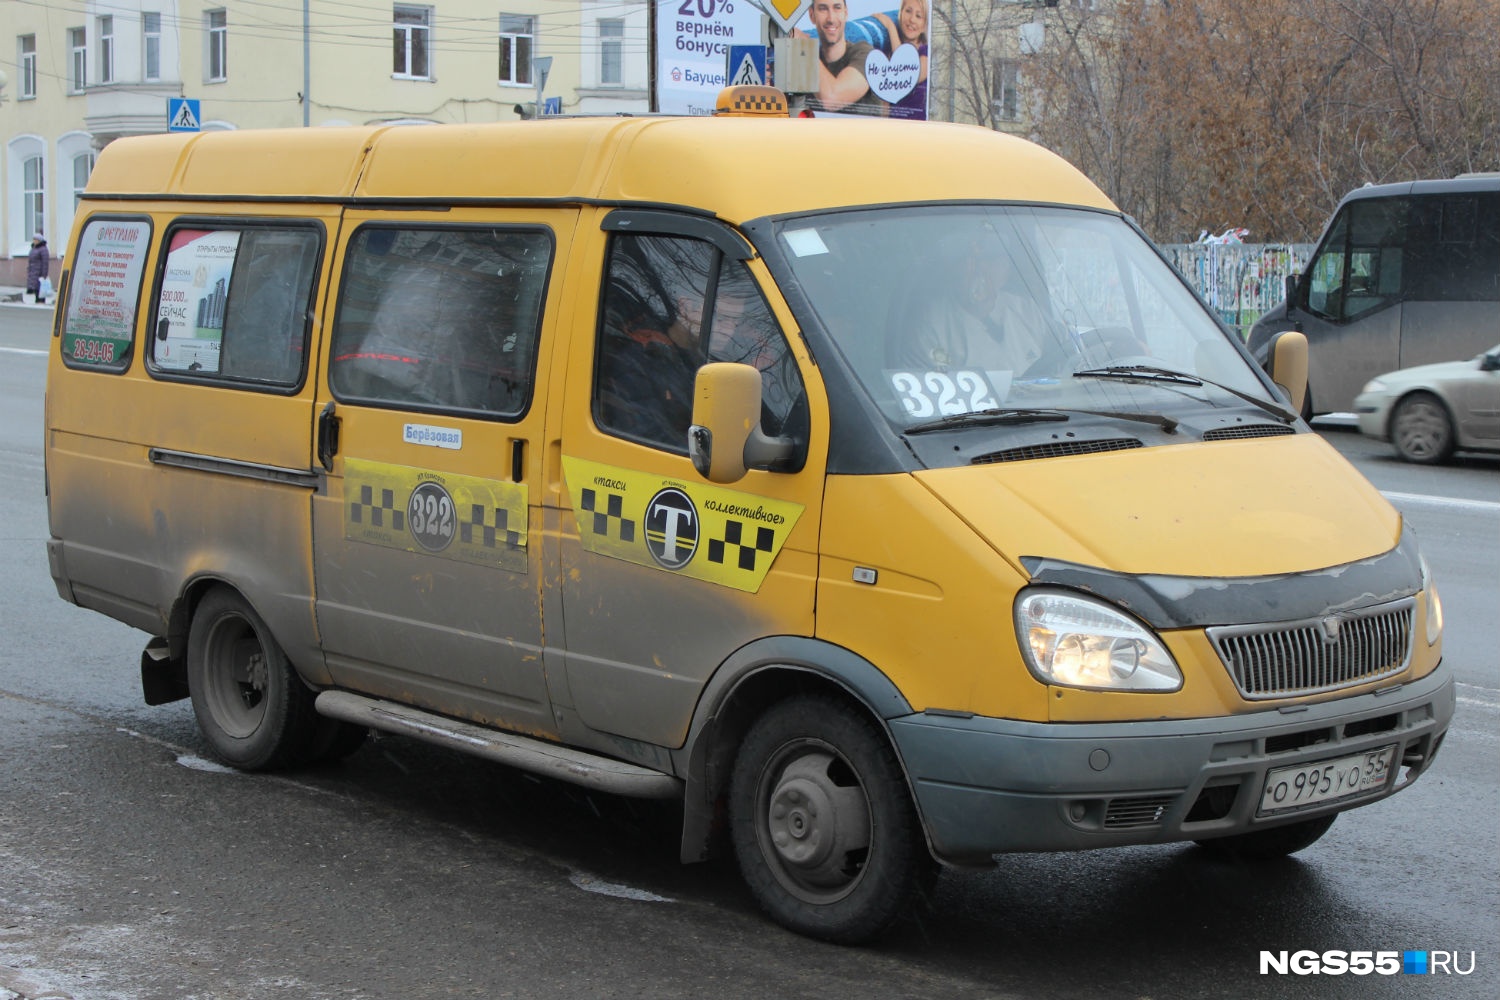 Найти маршрутное такси. Газель 322. Газель маршрутное такси. 424 Газель Омск. Газель такси.